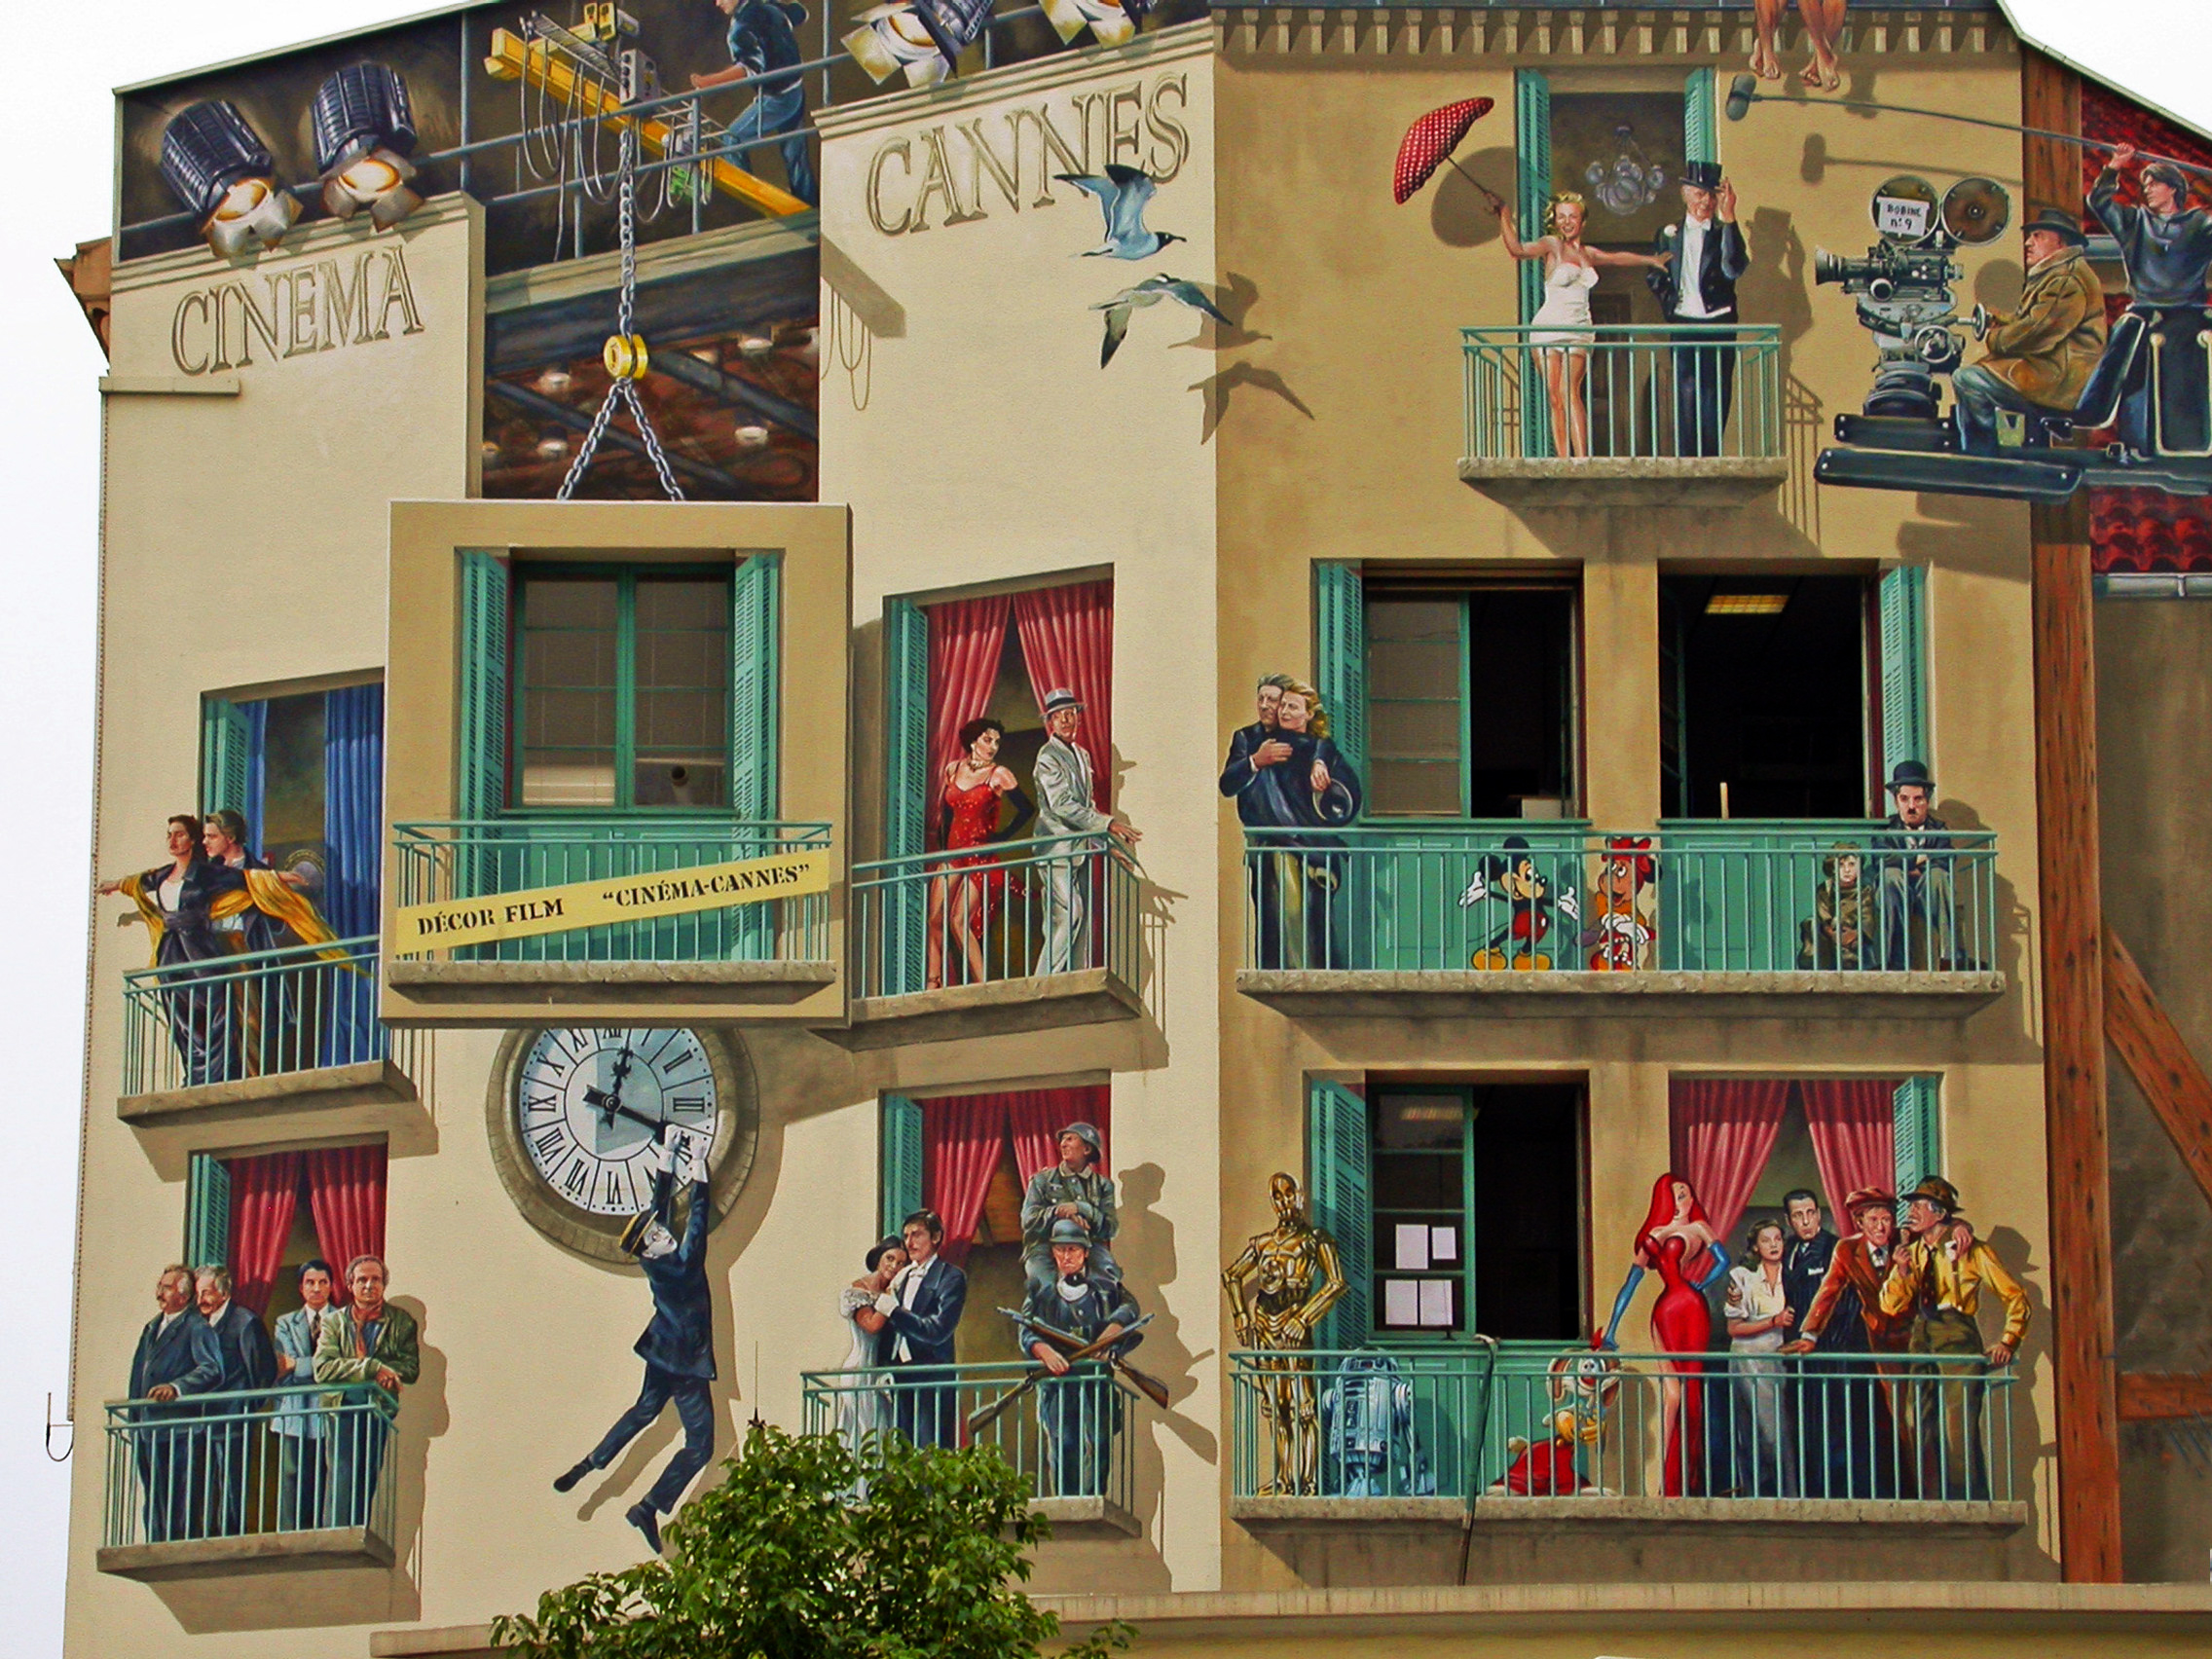 Murales in Cannes Oct 2016...